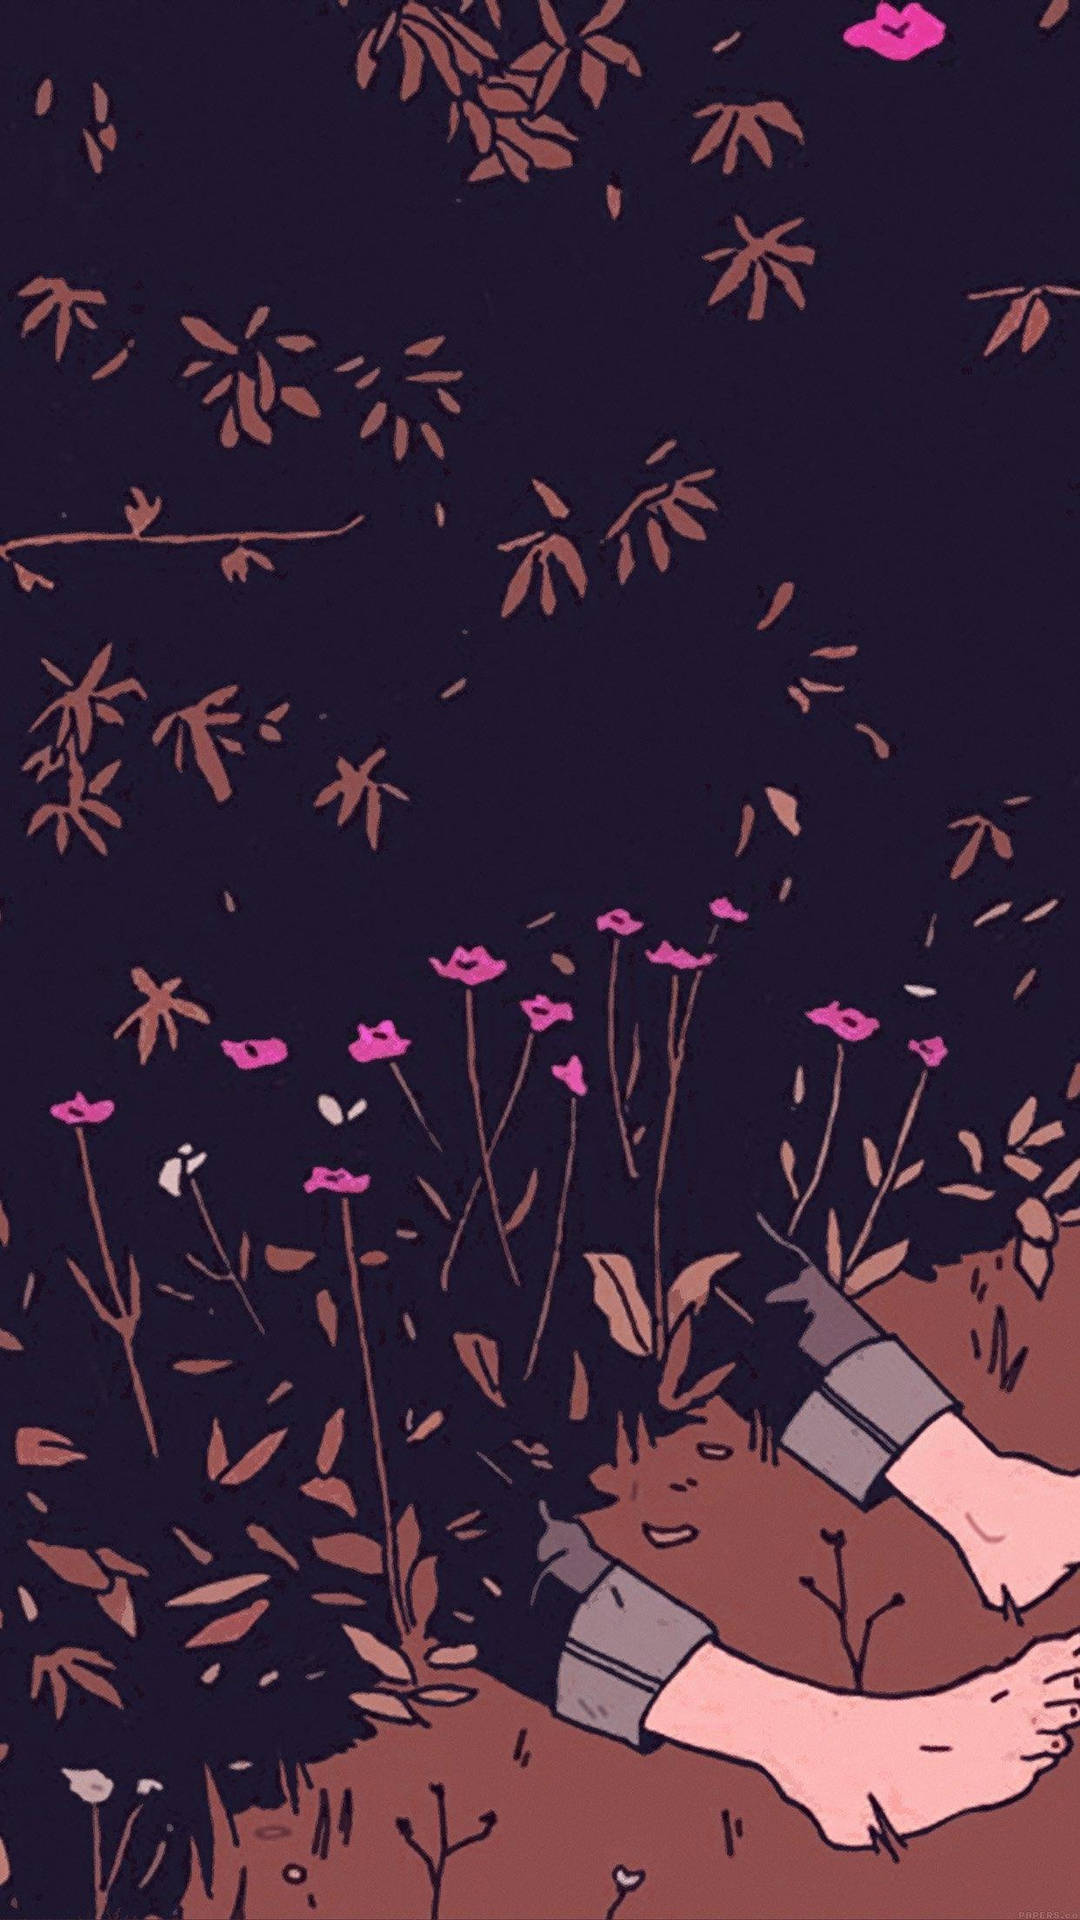 Aesthetic Anime Boy Lying In Flowers Phone